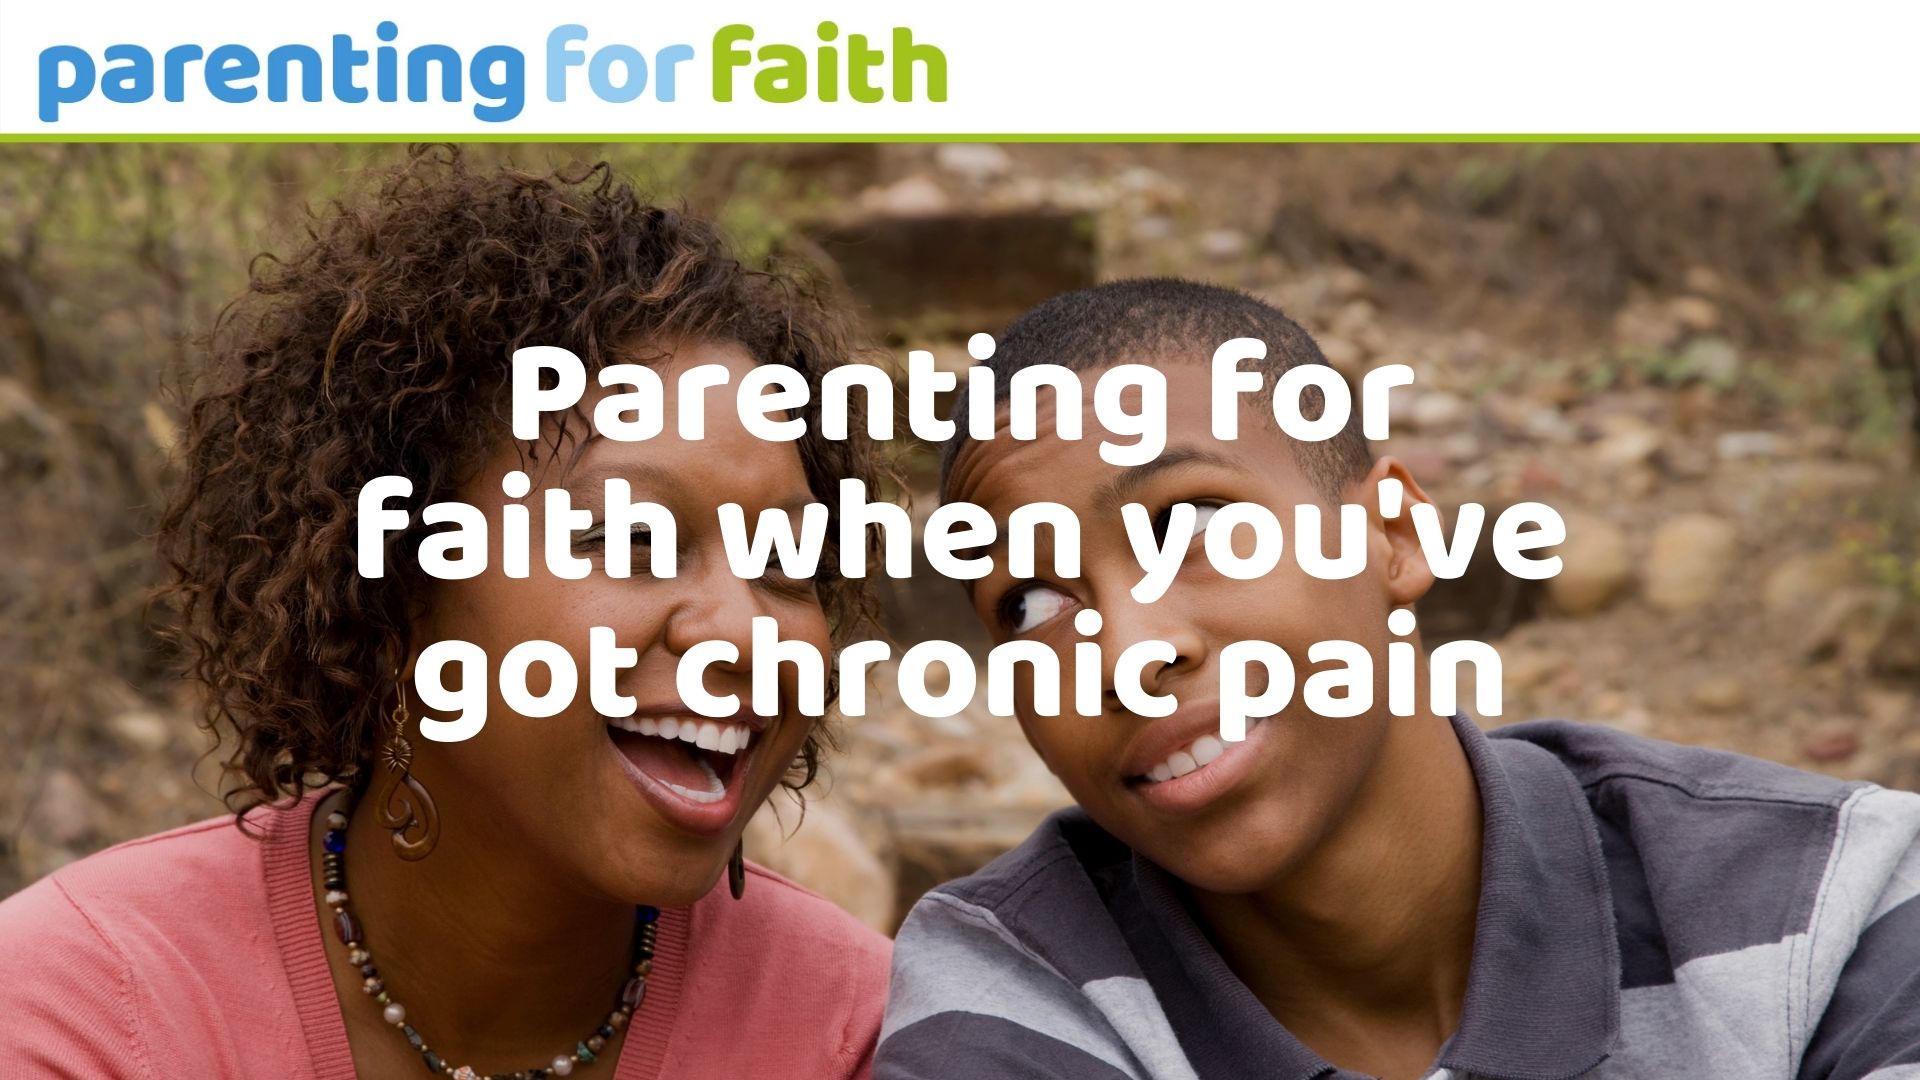 Parenting for faith when you've got chronic pain